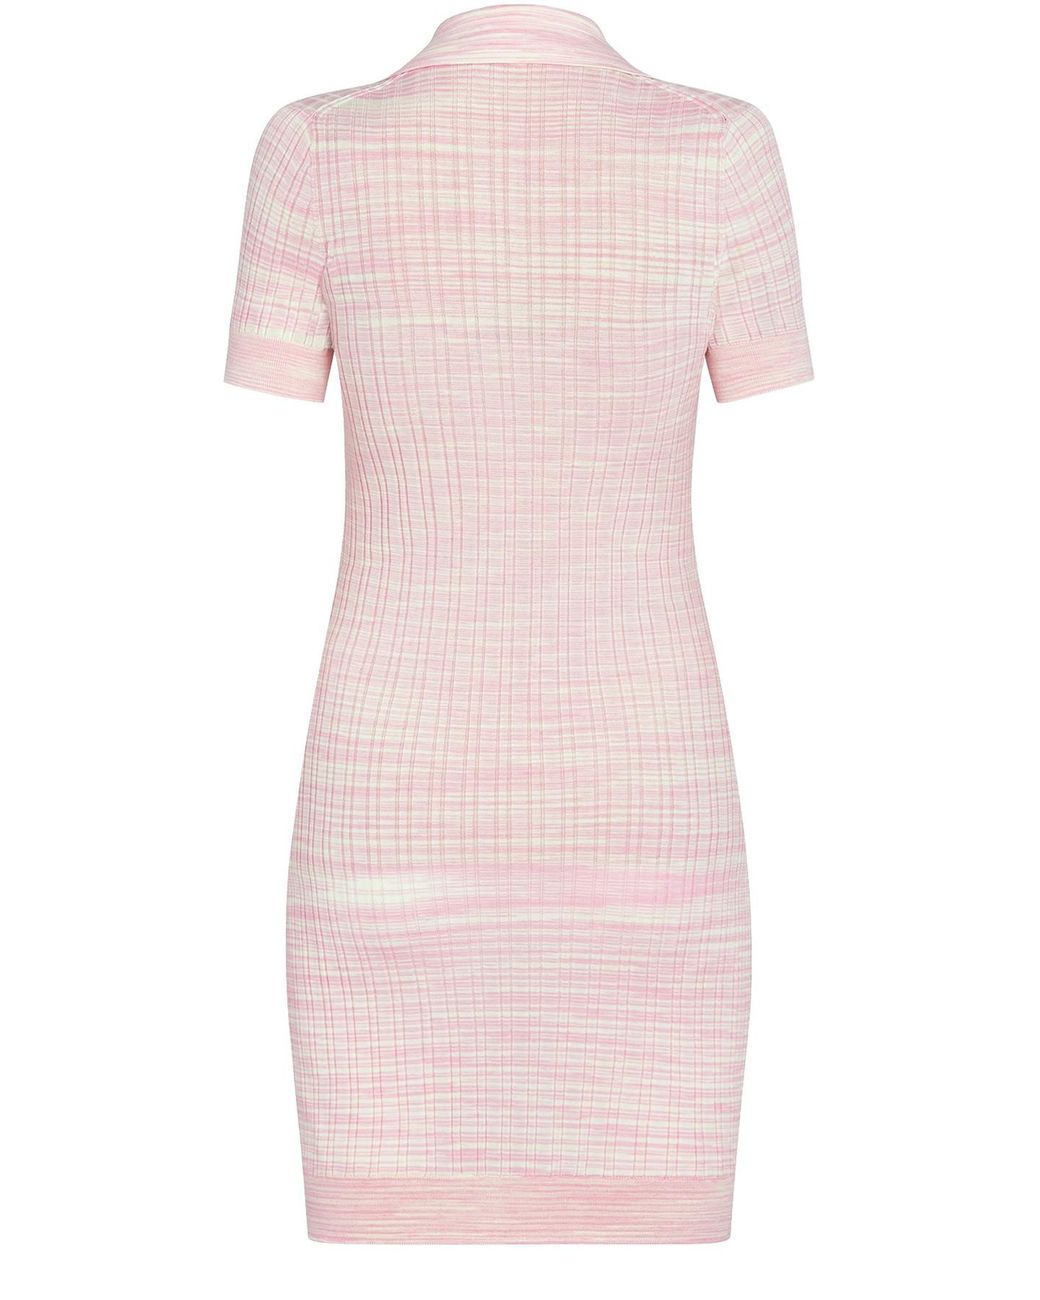 Dress by Louis Vuitton  Dresses, Pink dress, Dress picture